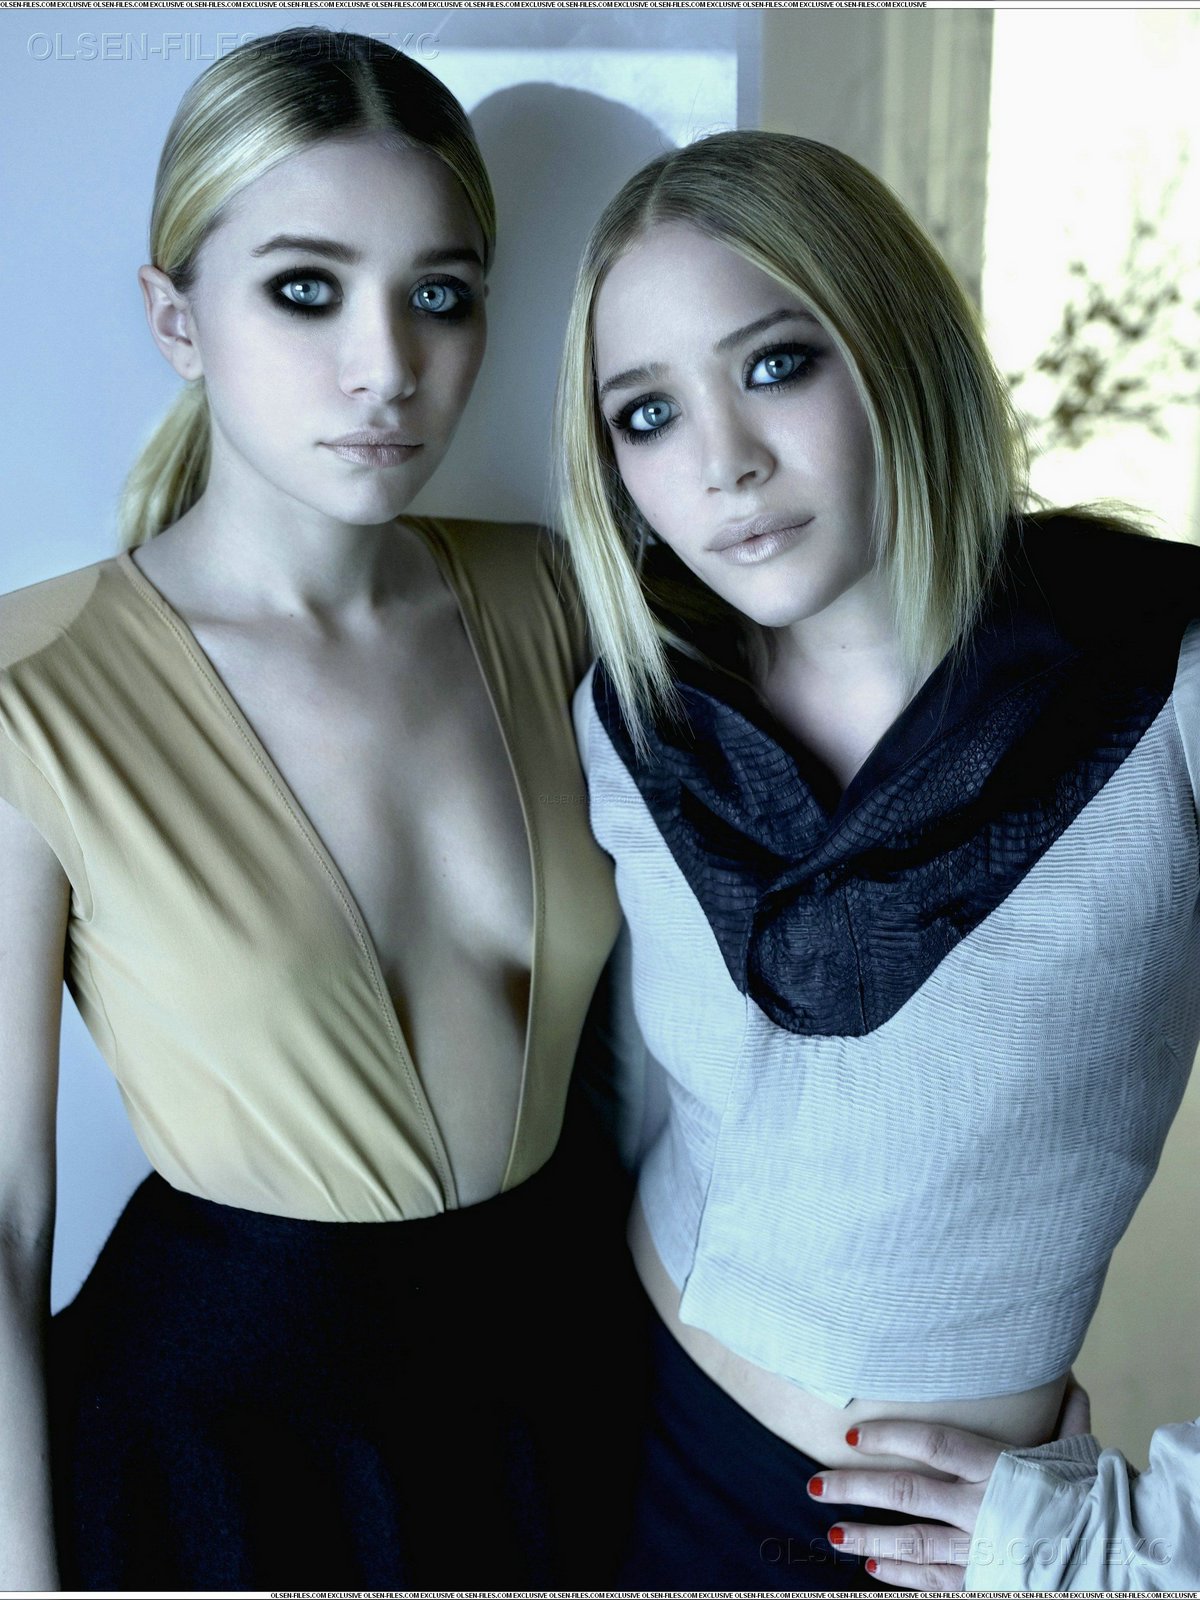 Olsen twins nude see through nipples - Nude photos